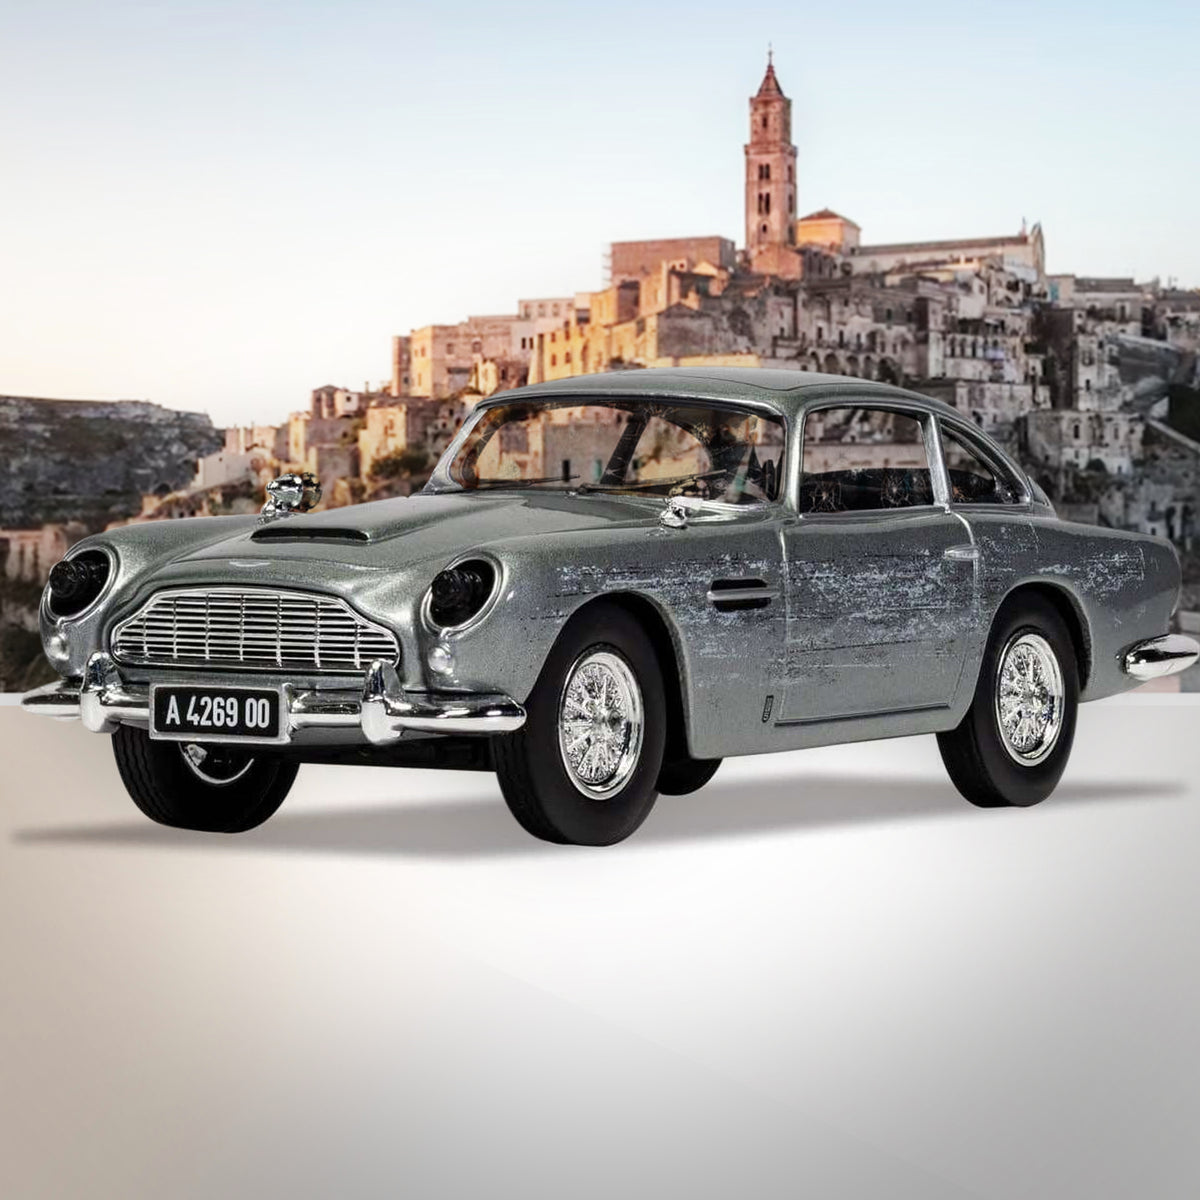 James Bond Aston Martin DB5 Model Car - No Time To Die Edition - By Corgi